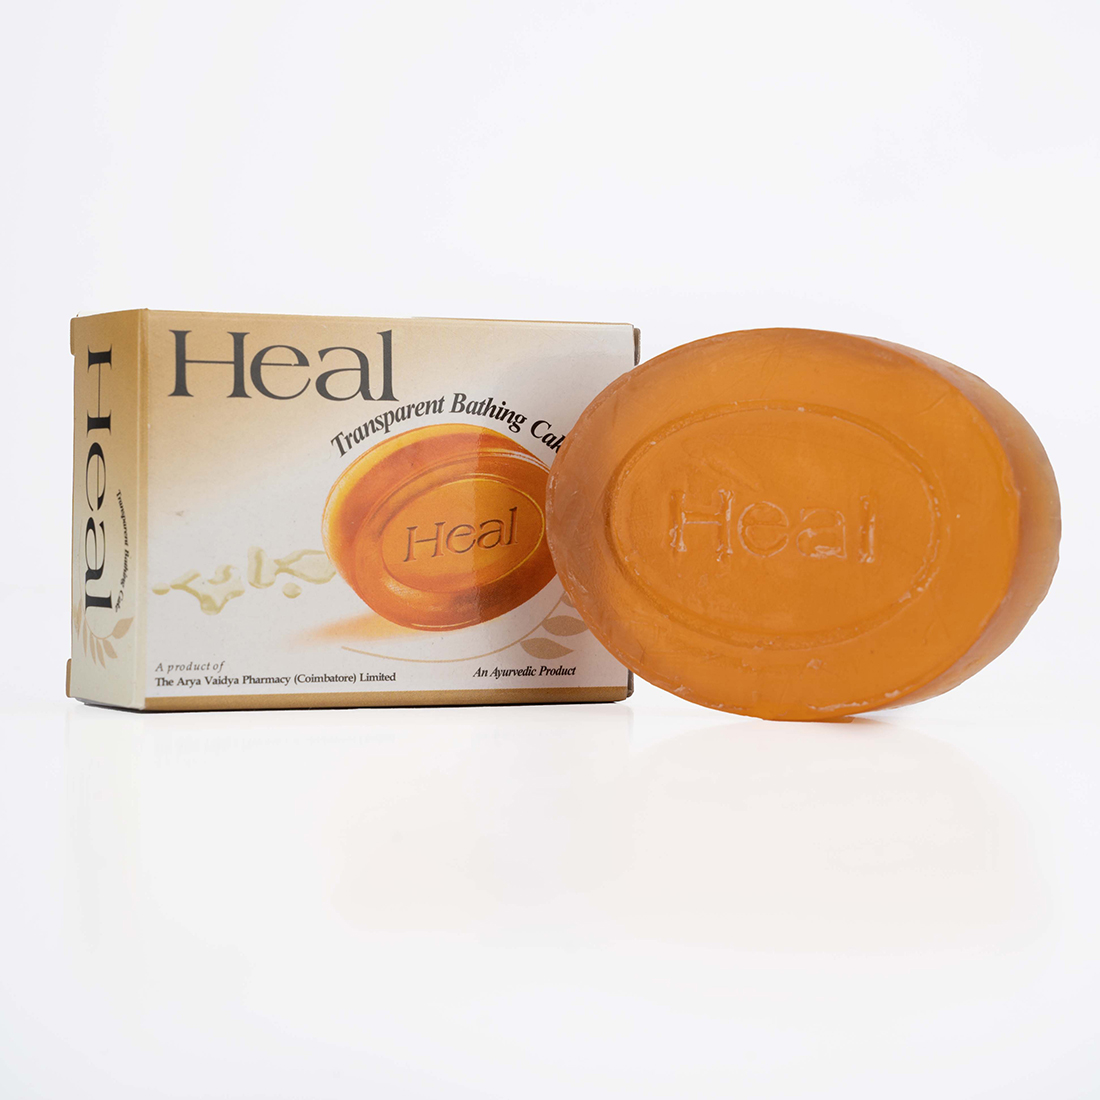 Heal Transparent Bathing Cake – 75 g